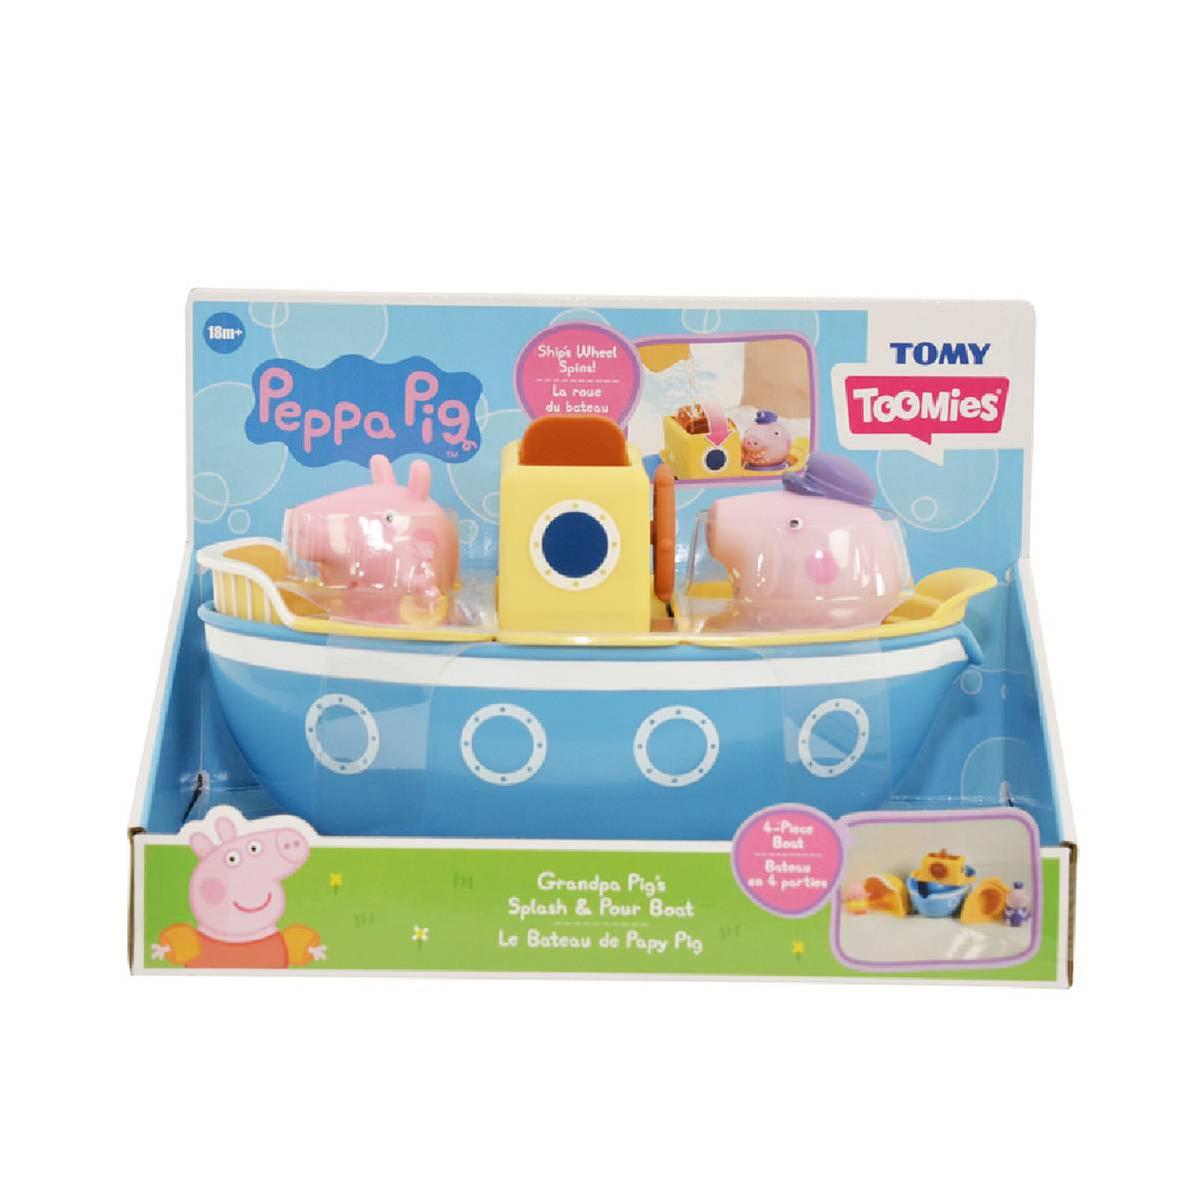 Religioso Arco iris Sollozos Peppa Pig - Barco de baño del abuelo Pig | Peppa Pig. Cat 54 | Toys"R"Us  España